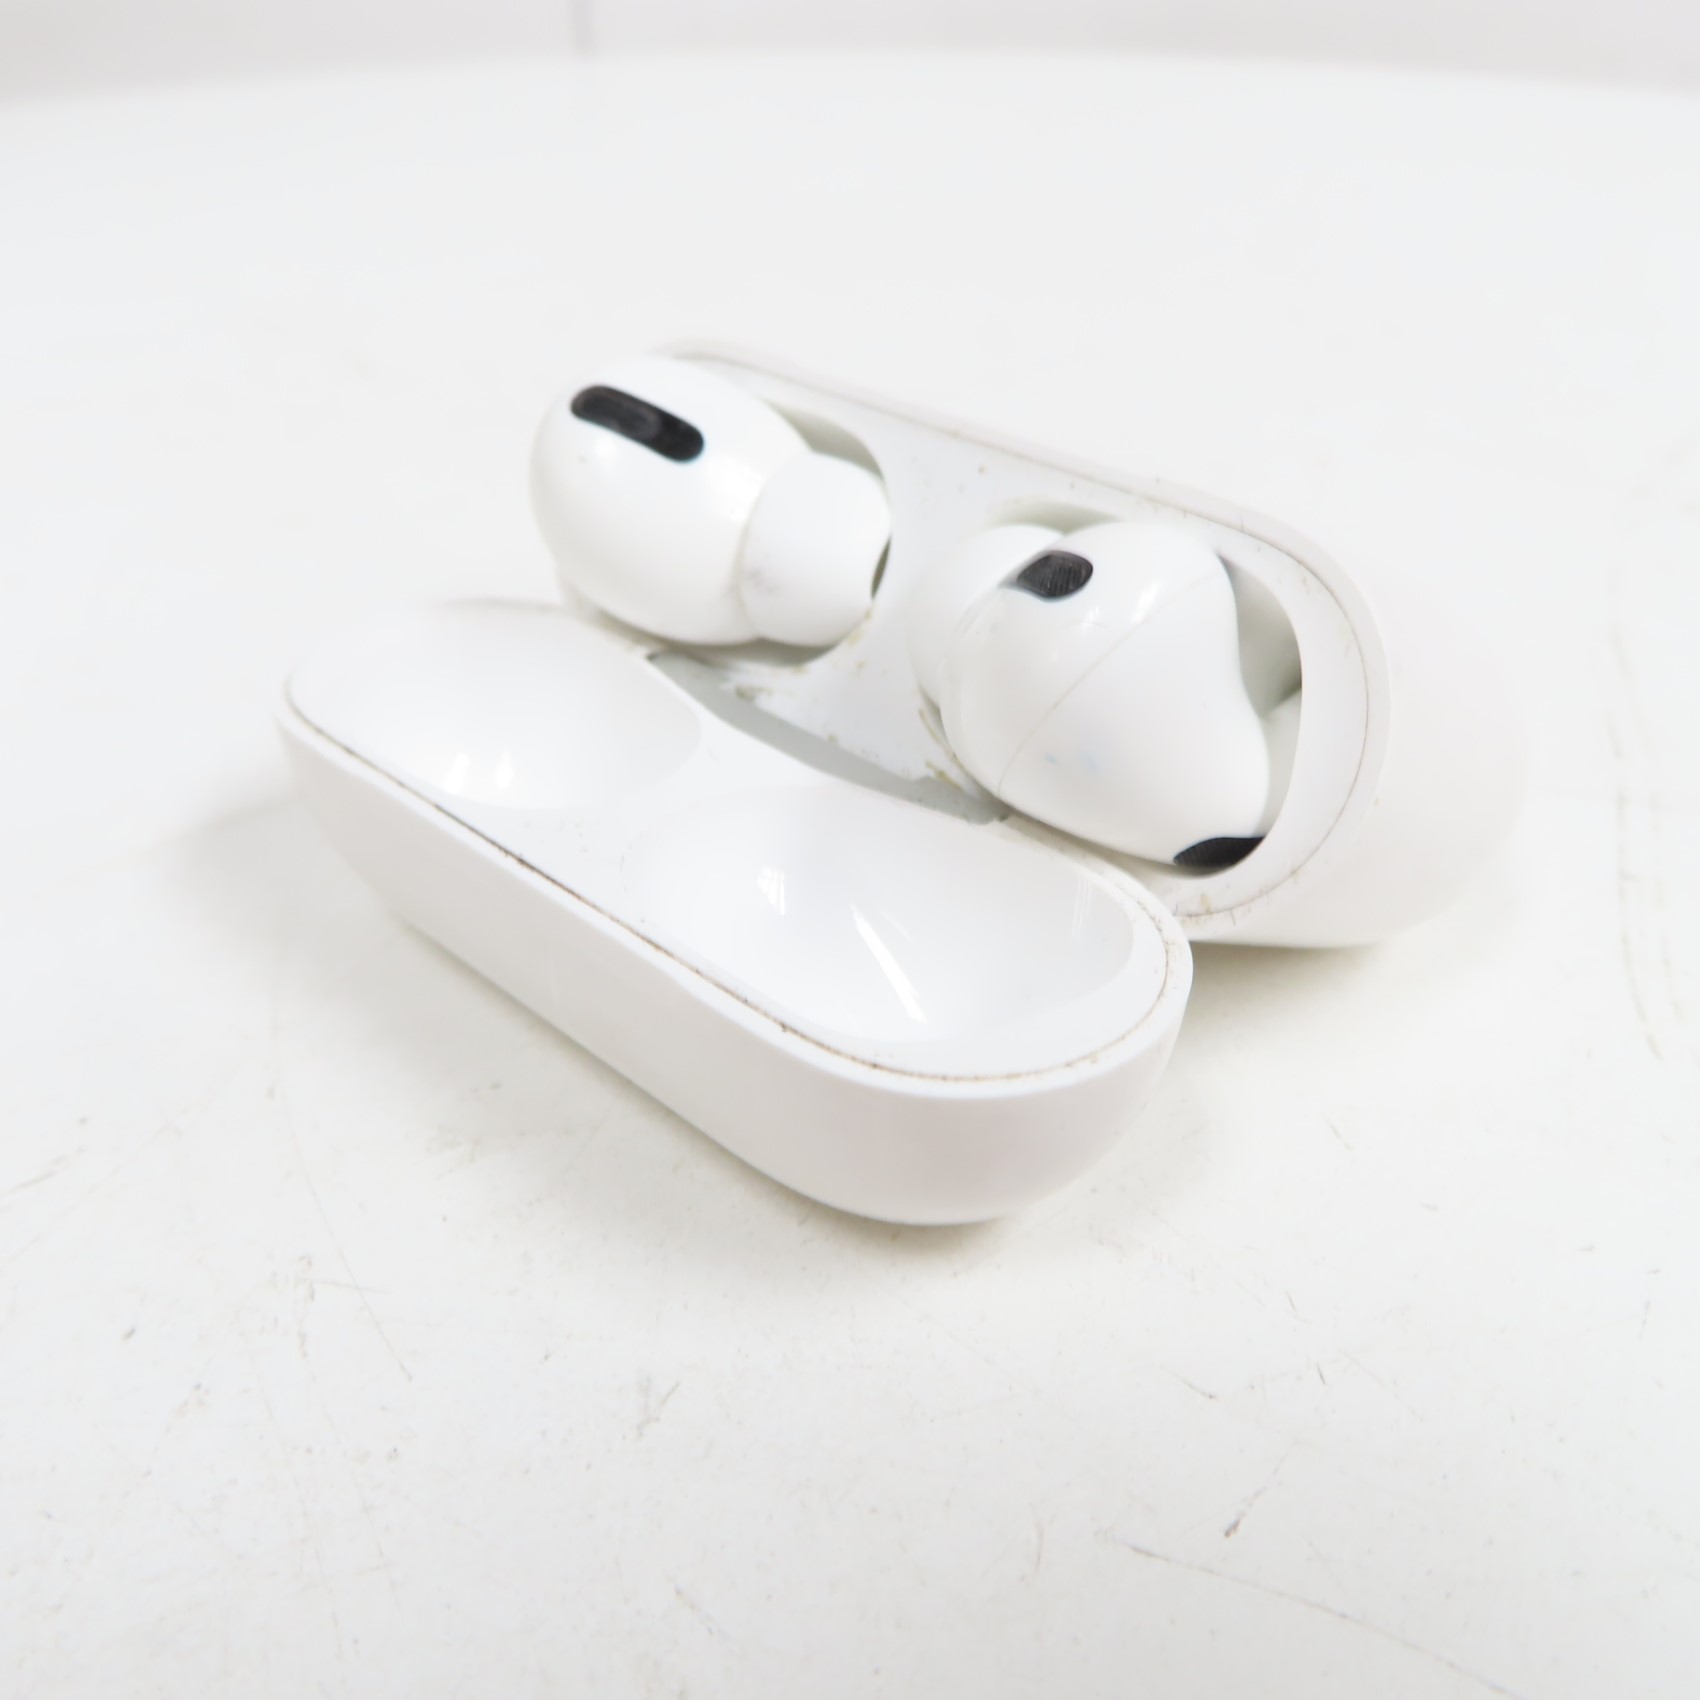 Apple MWP22AM/A AirPods Pro (1st Gen) Wireless Bluetooth Earbuds